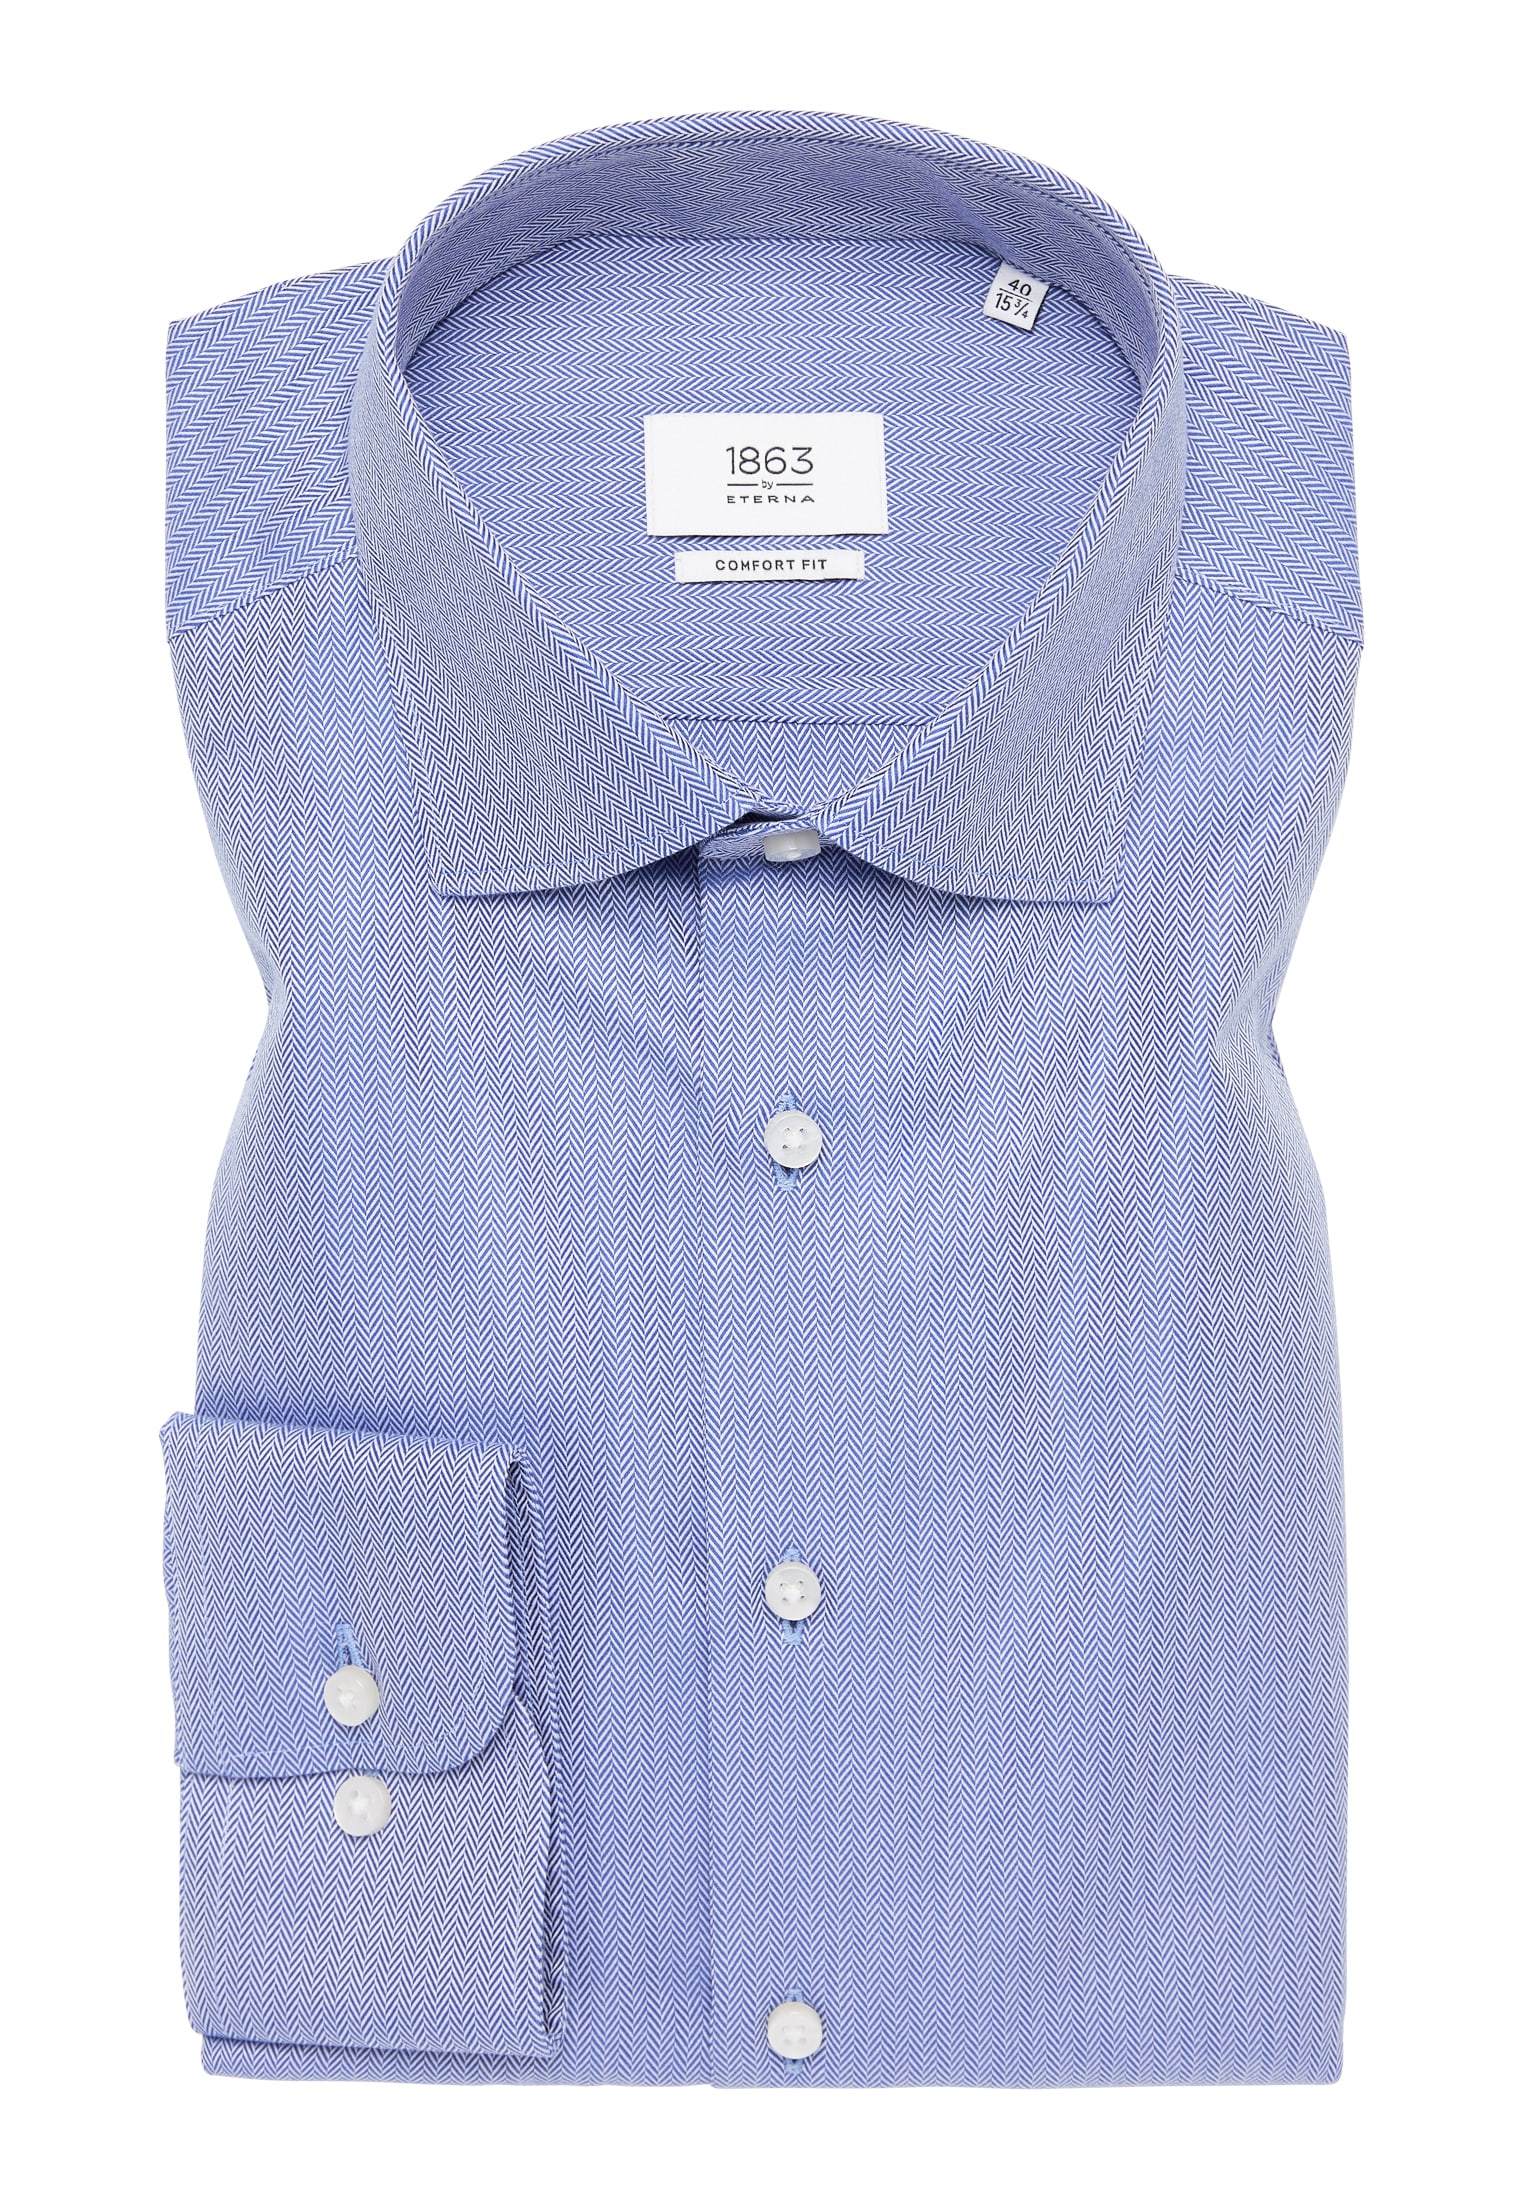 COMFORT FIT Shirt in royal blue royal blue long | 1SH12506-01-51-40-1/1 | sleeve 40 | plain 